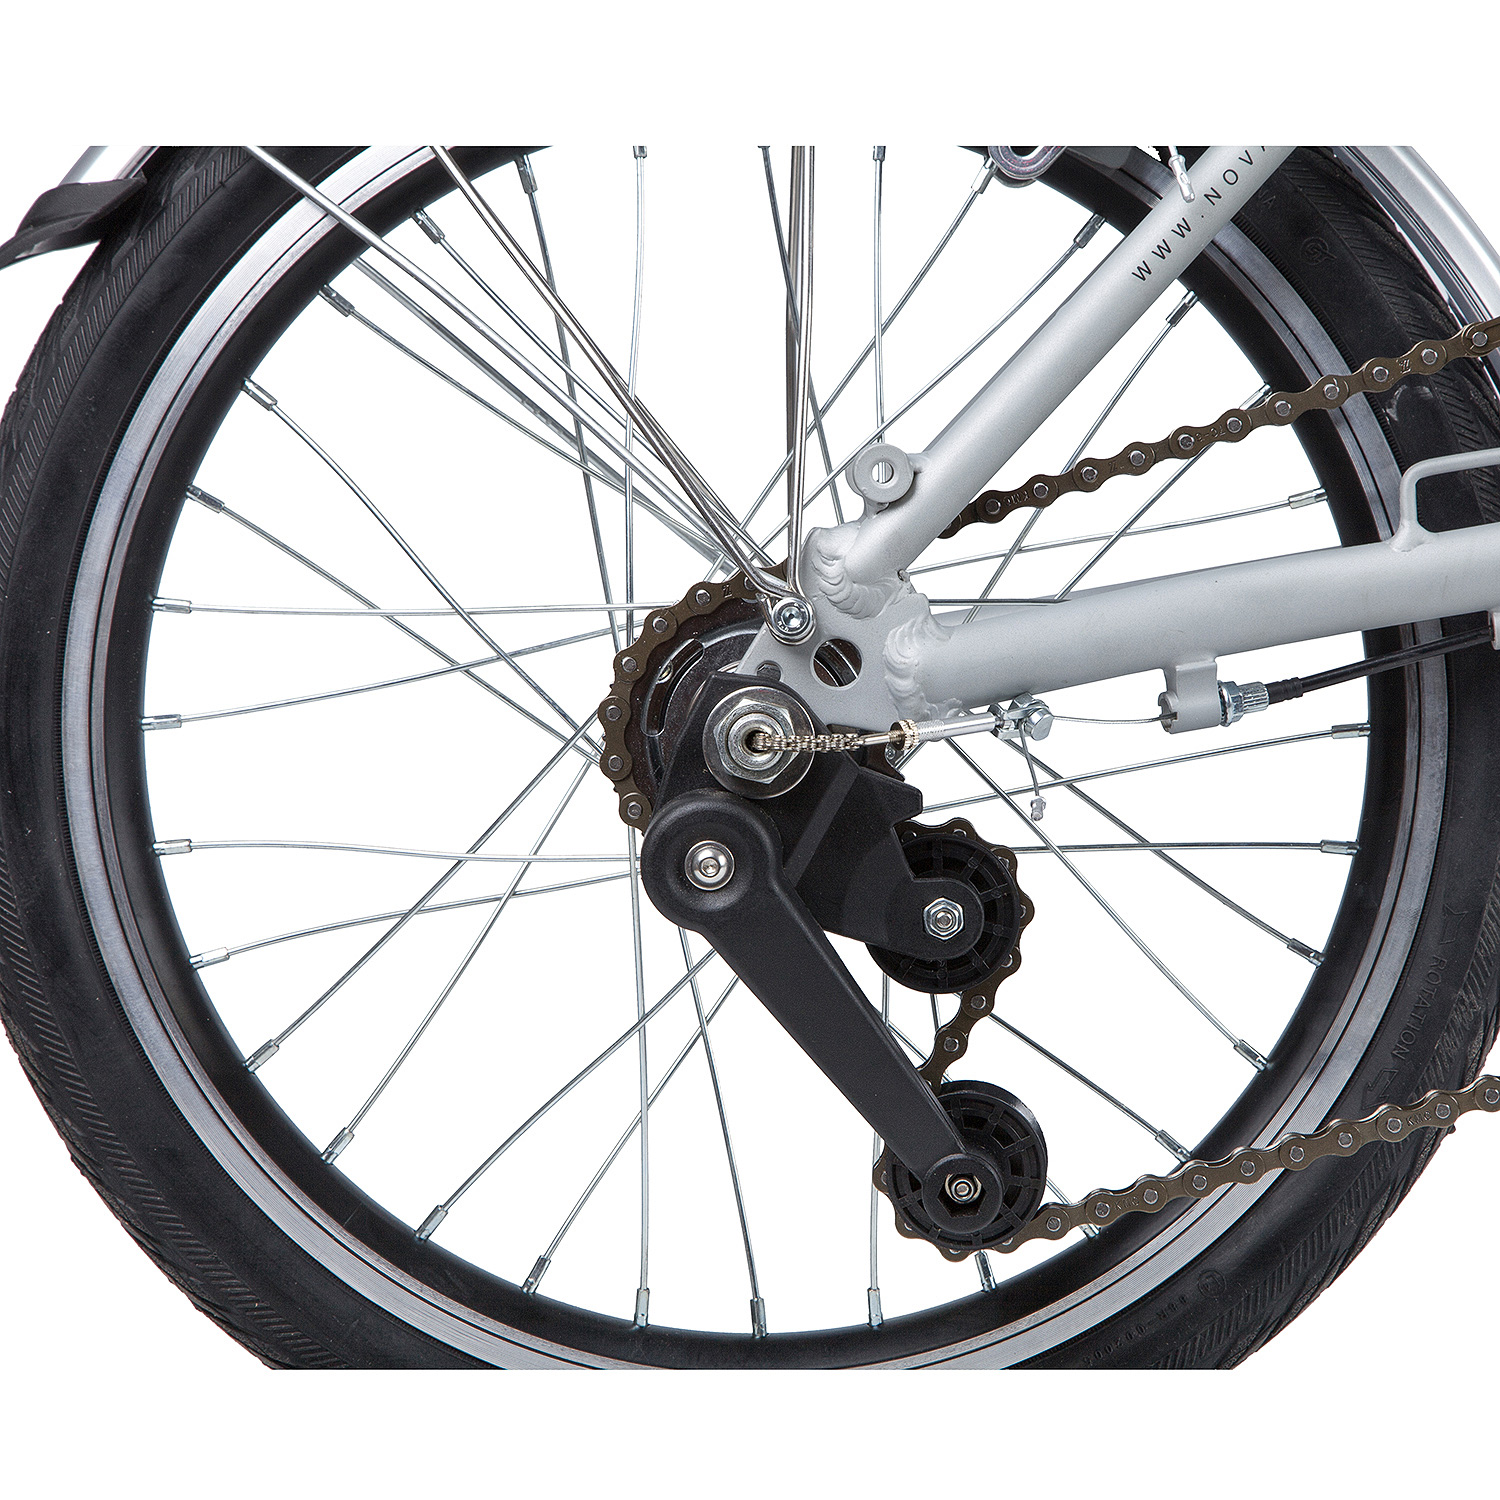 Велосипед Novatrack TG-16 2020 One Size grey